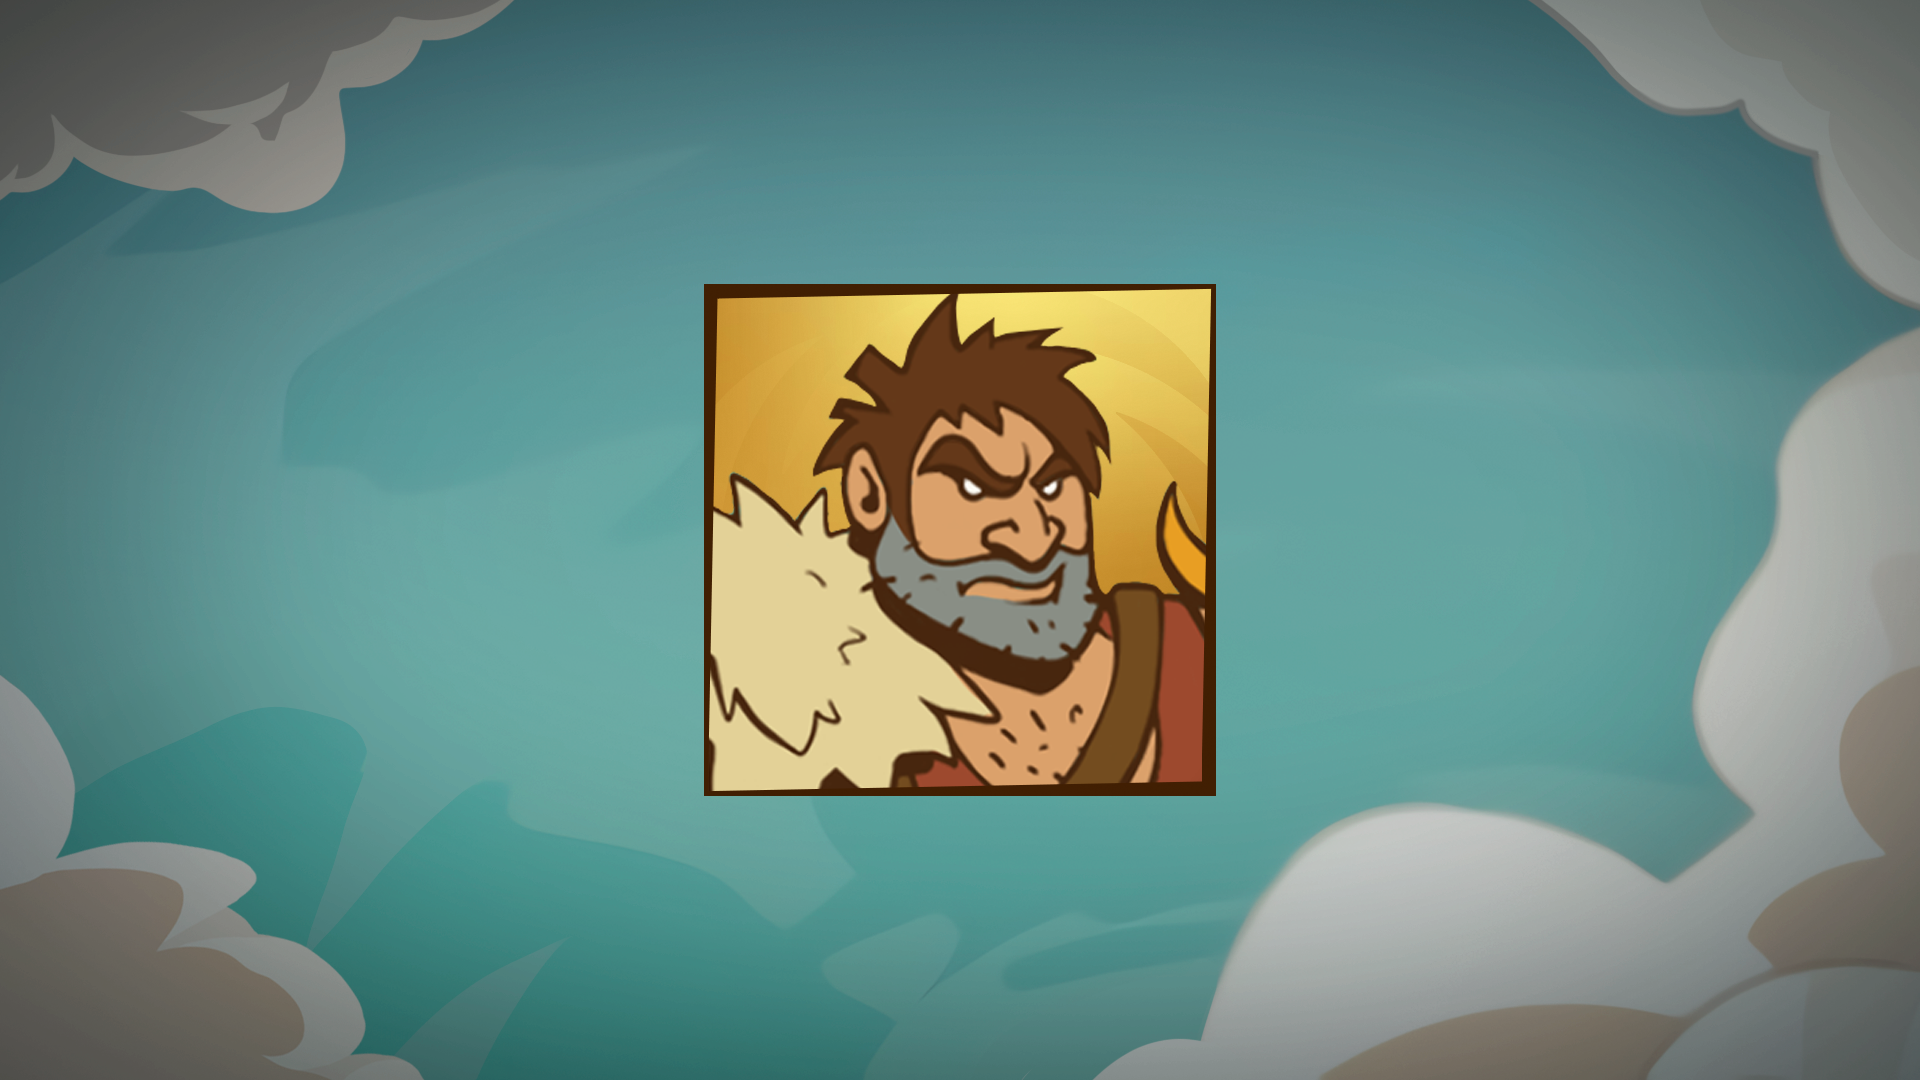 Icon for Bounty Hunter